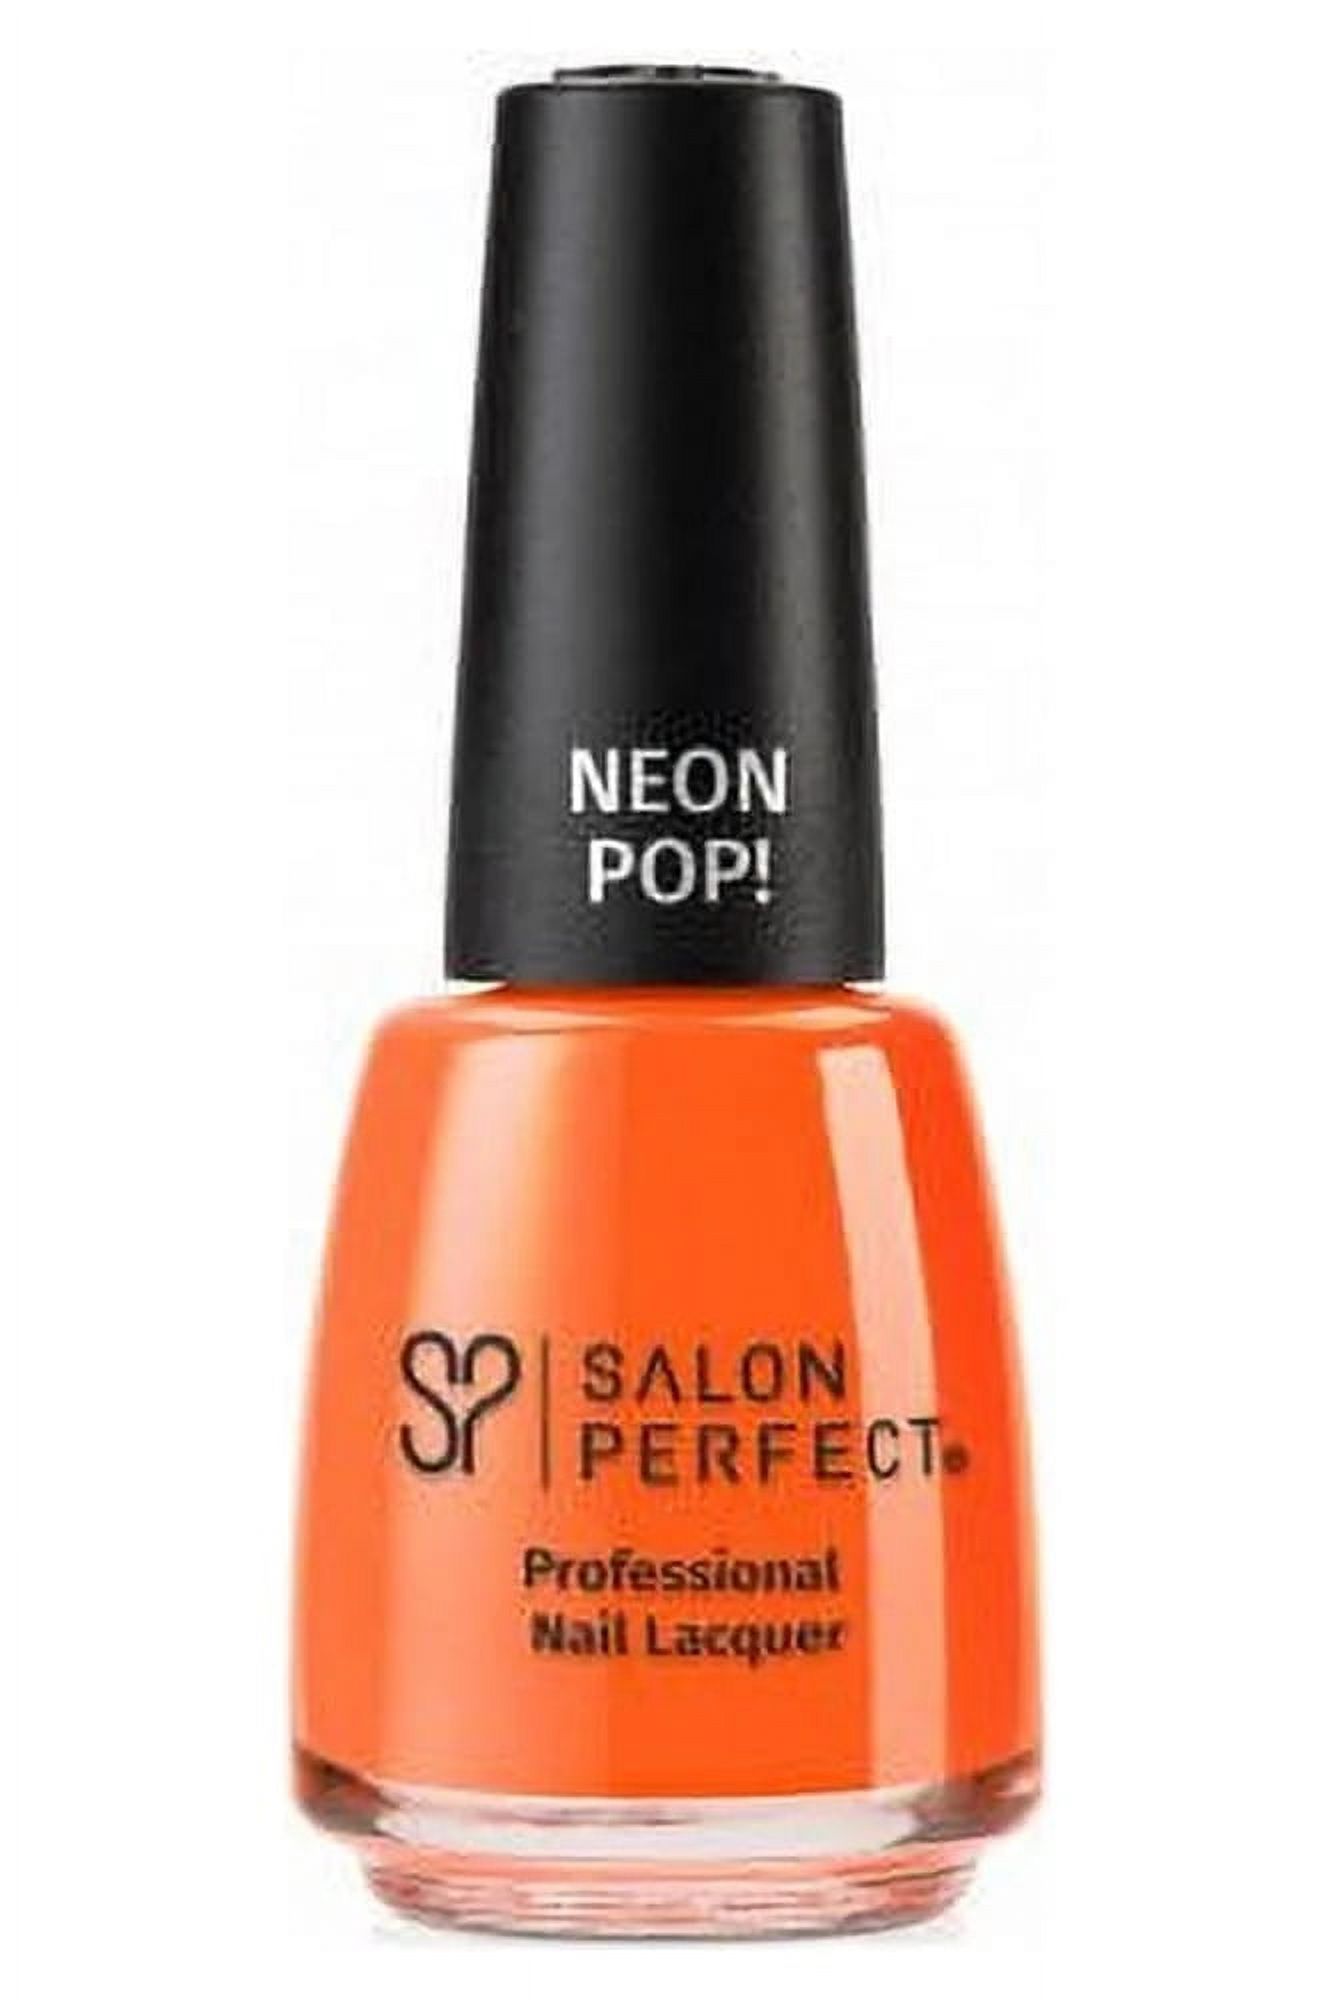 Salon Perfect Nail Polish, Traffic Cone, 0.5oz - image 1 of 3